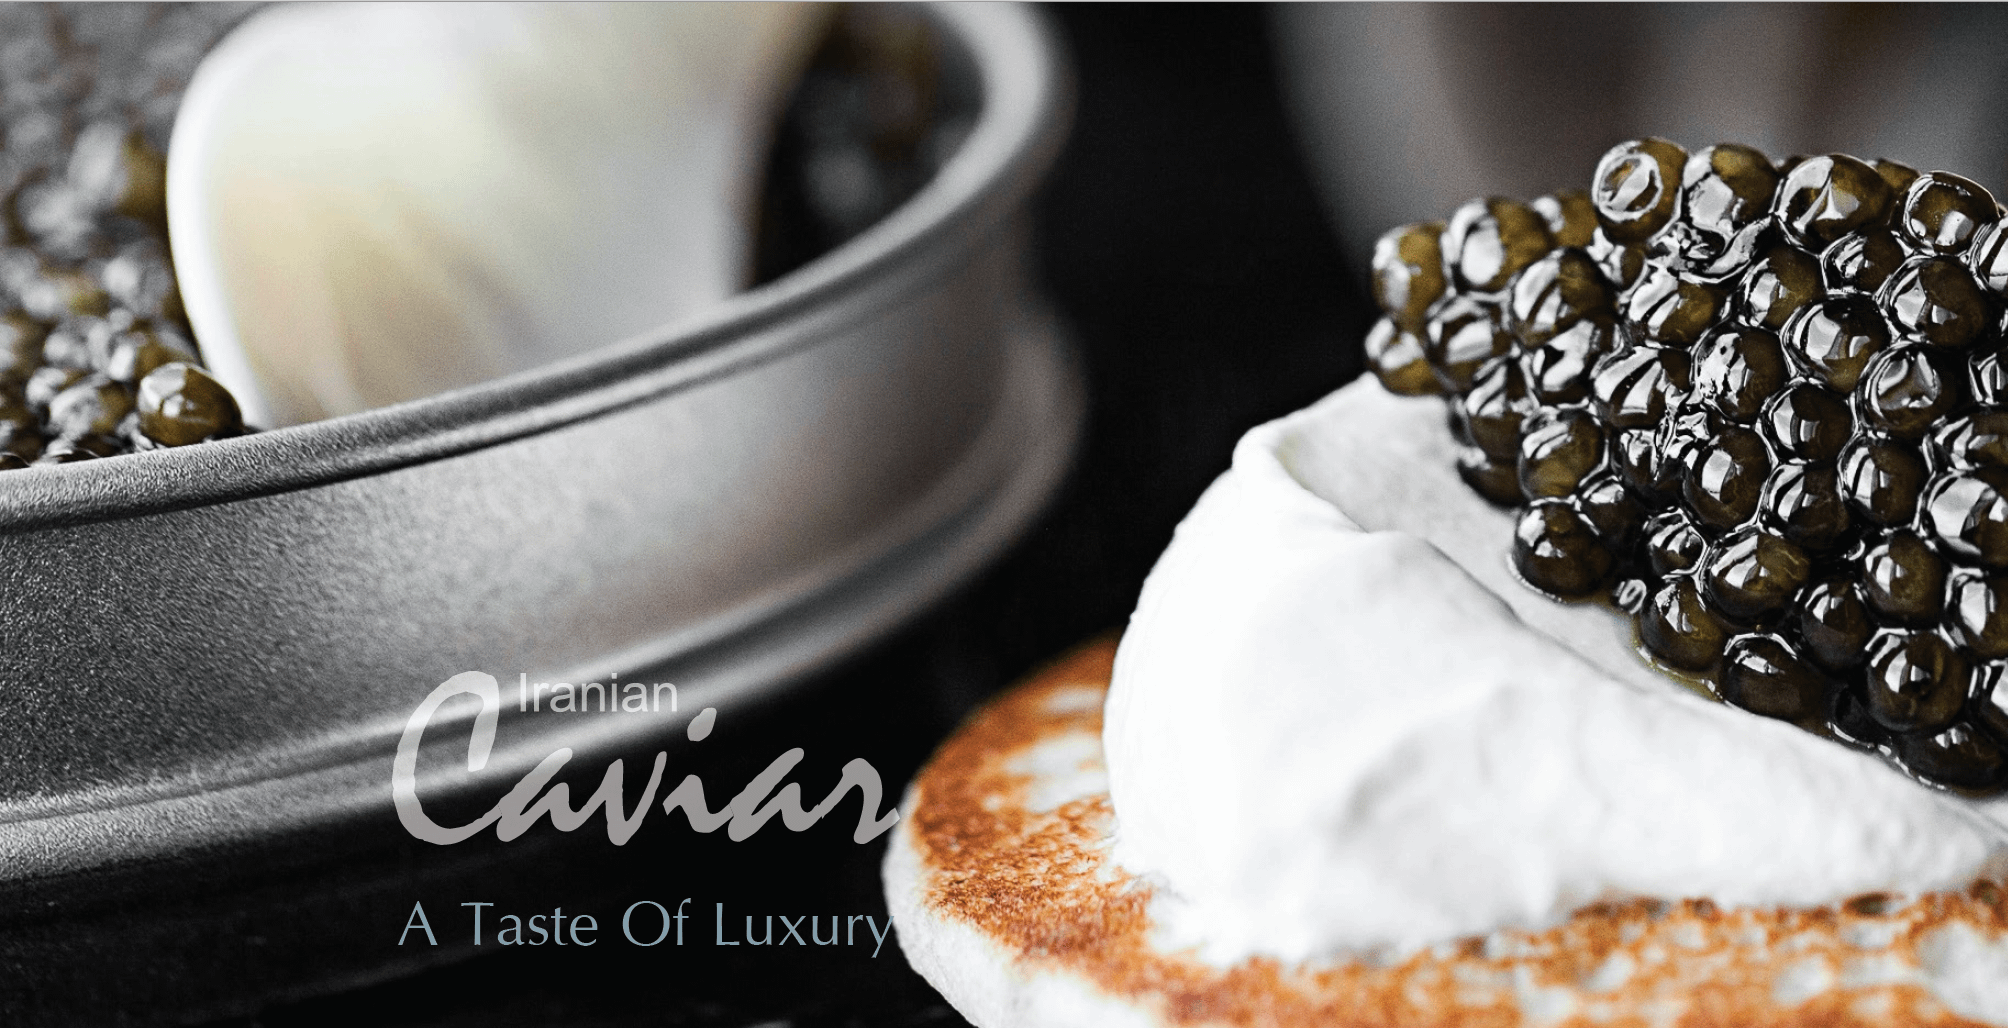 Reservation for Caviar Tasting